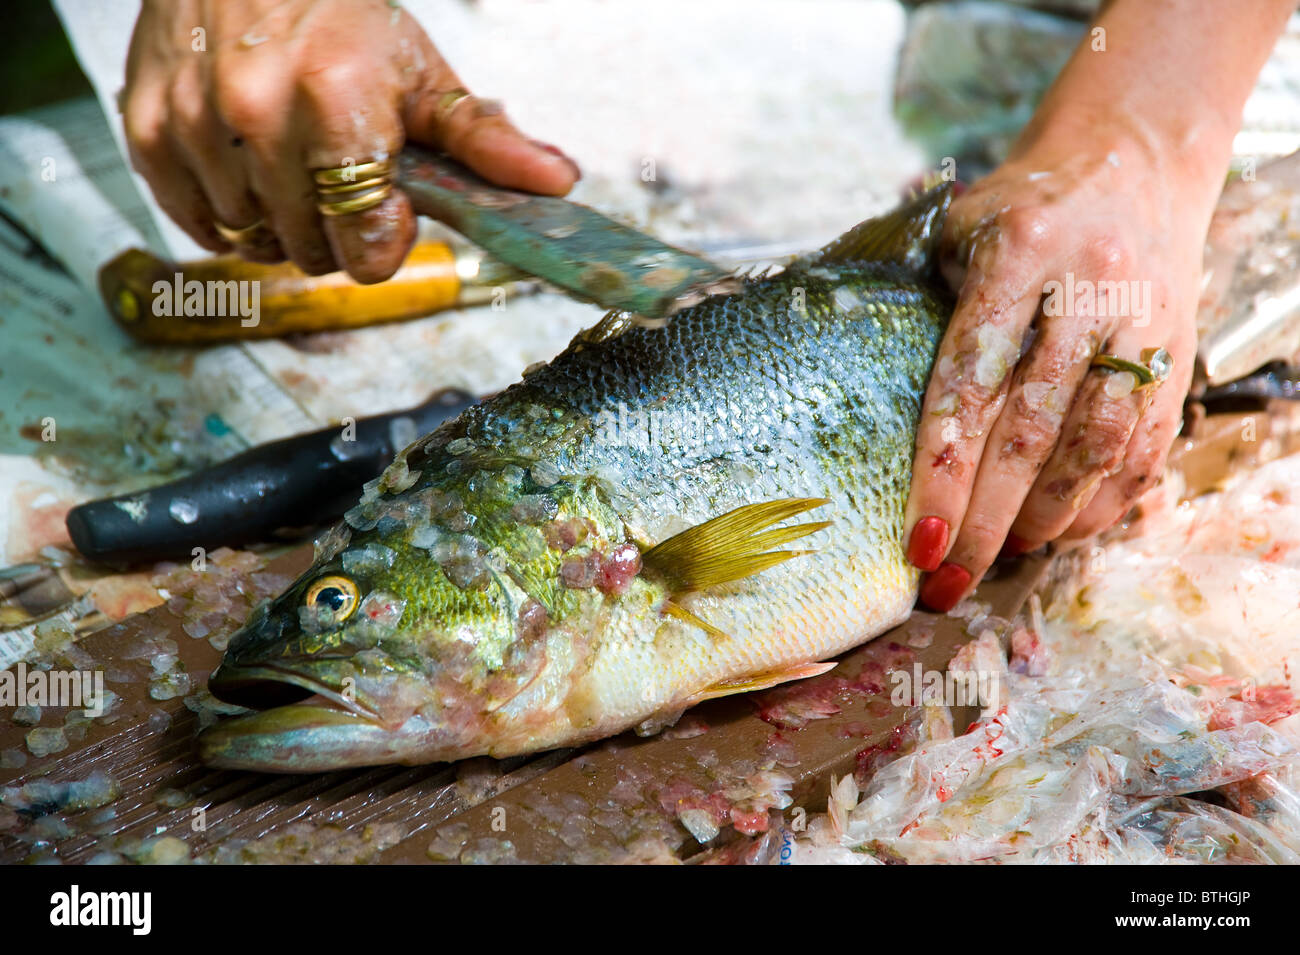 Big Mouth fish cleaning cutting splitting Stock Photo - Alamy